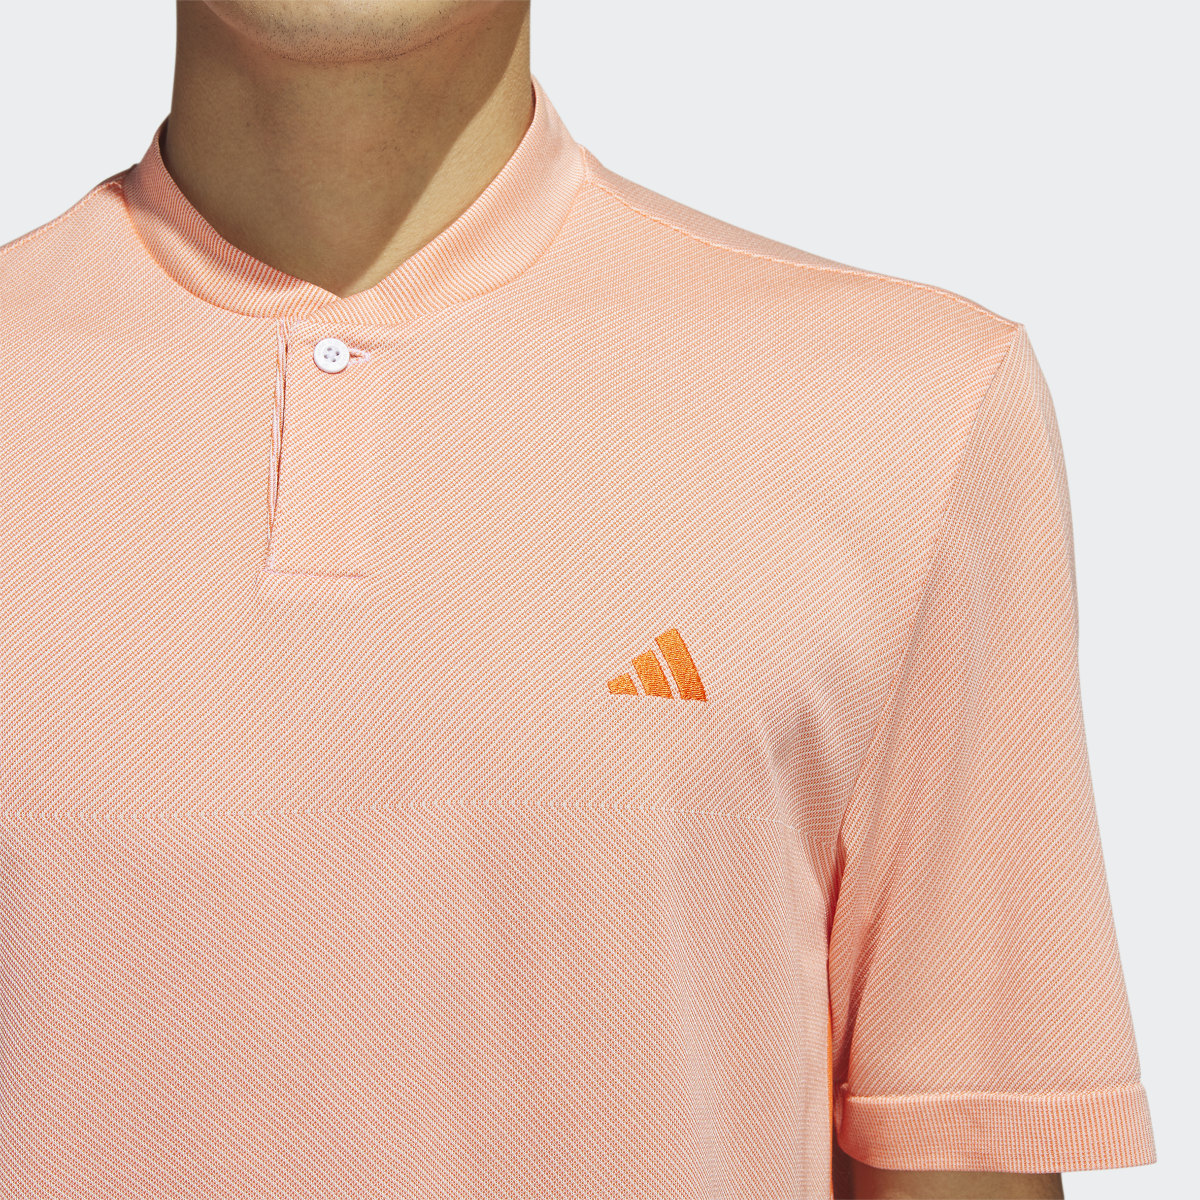 Adidas Made To Be Remade Henry Neck Seamless Golf Shirt. 7